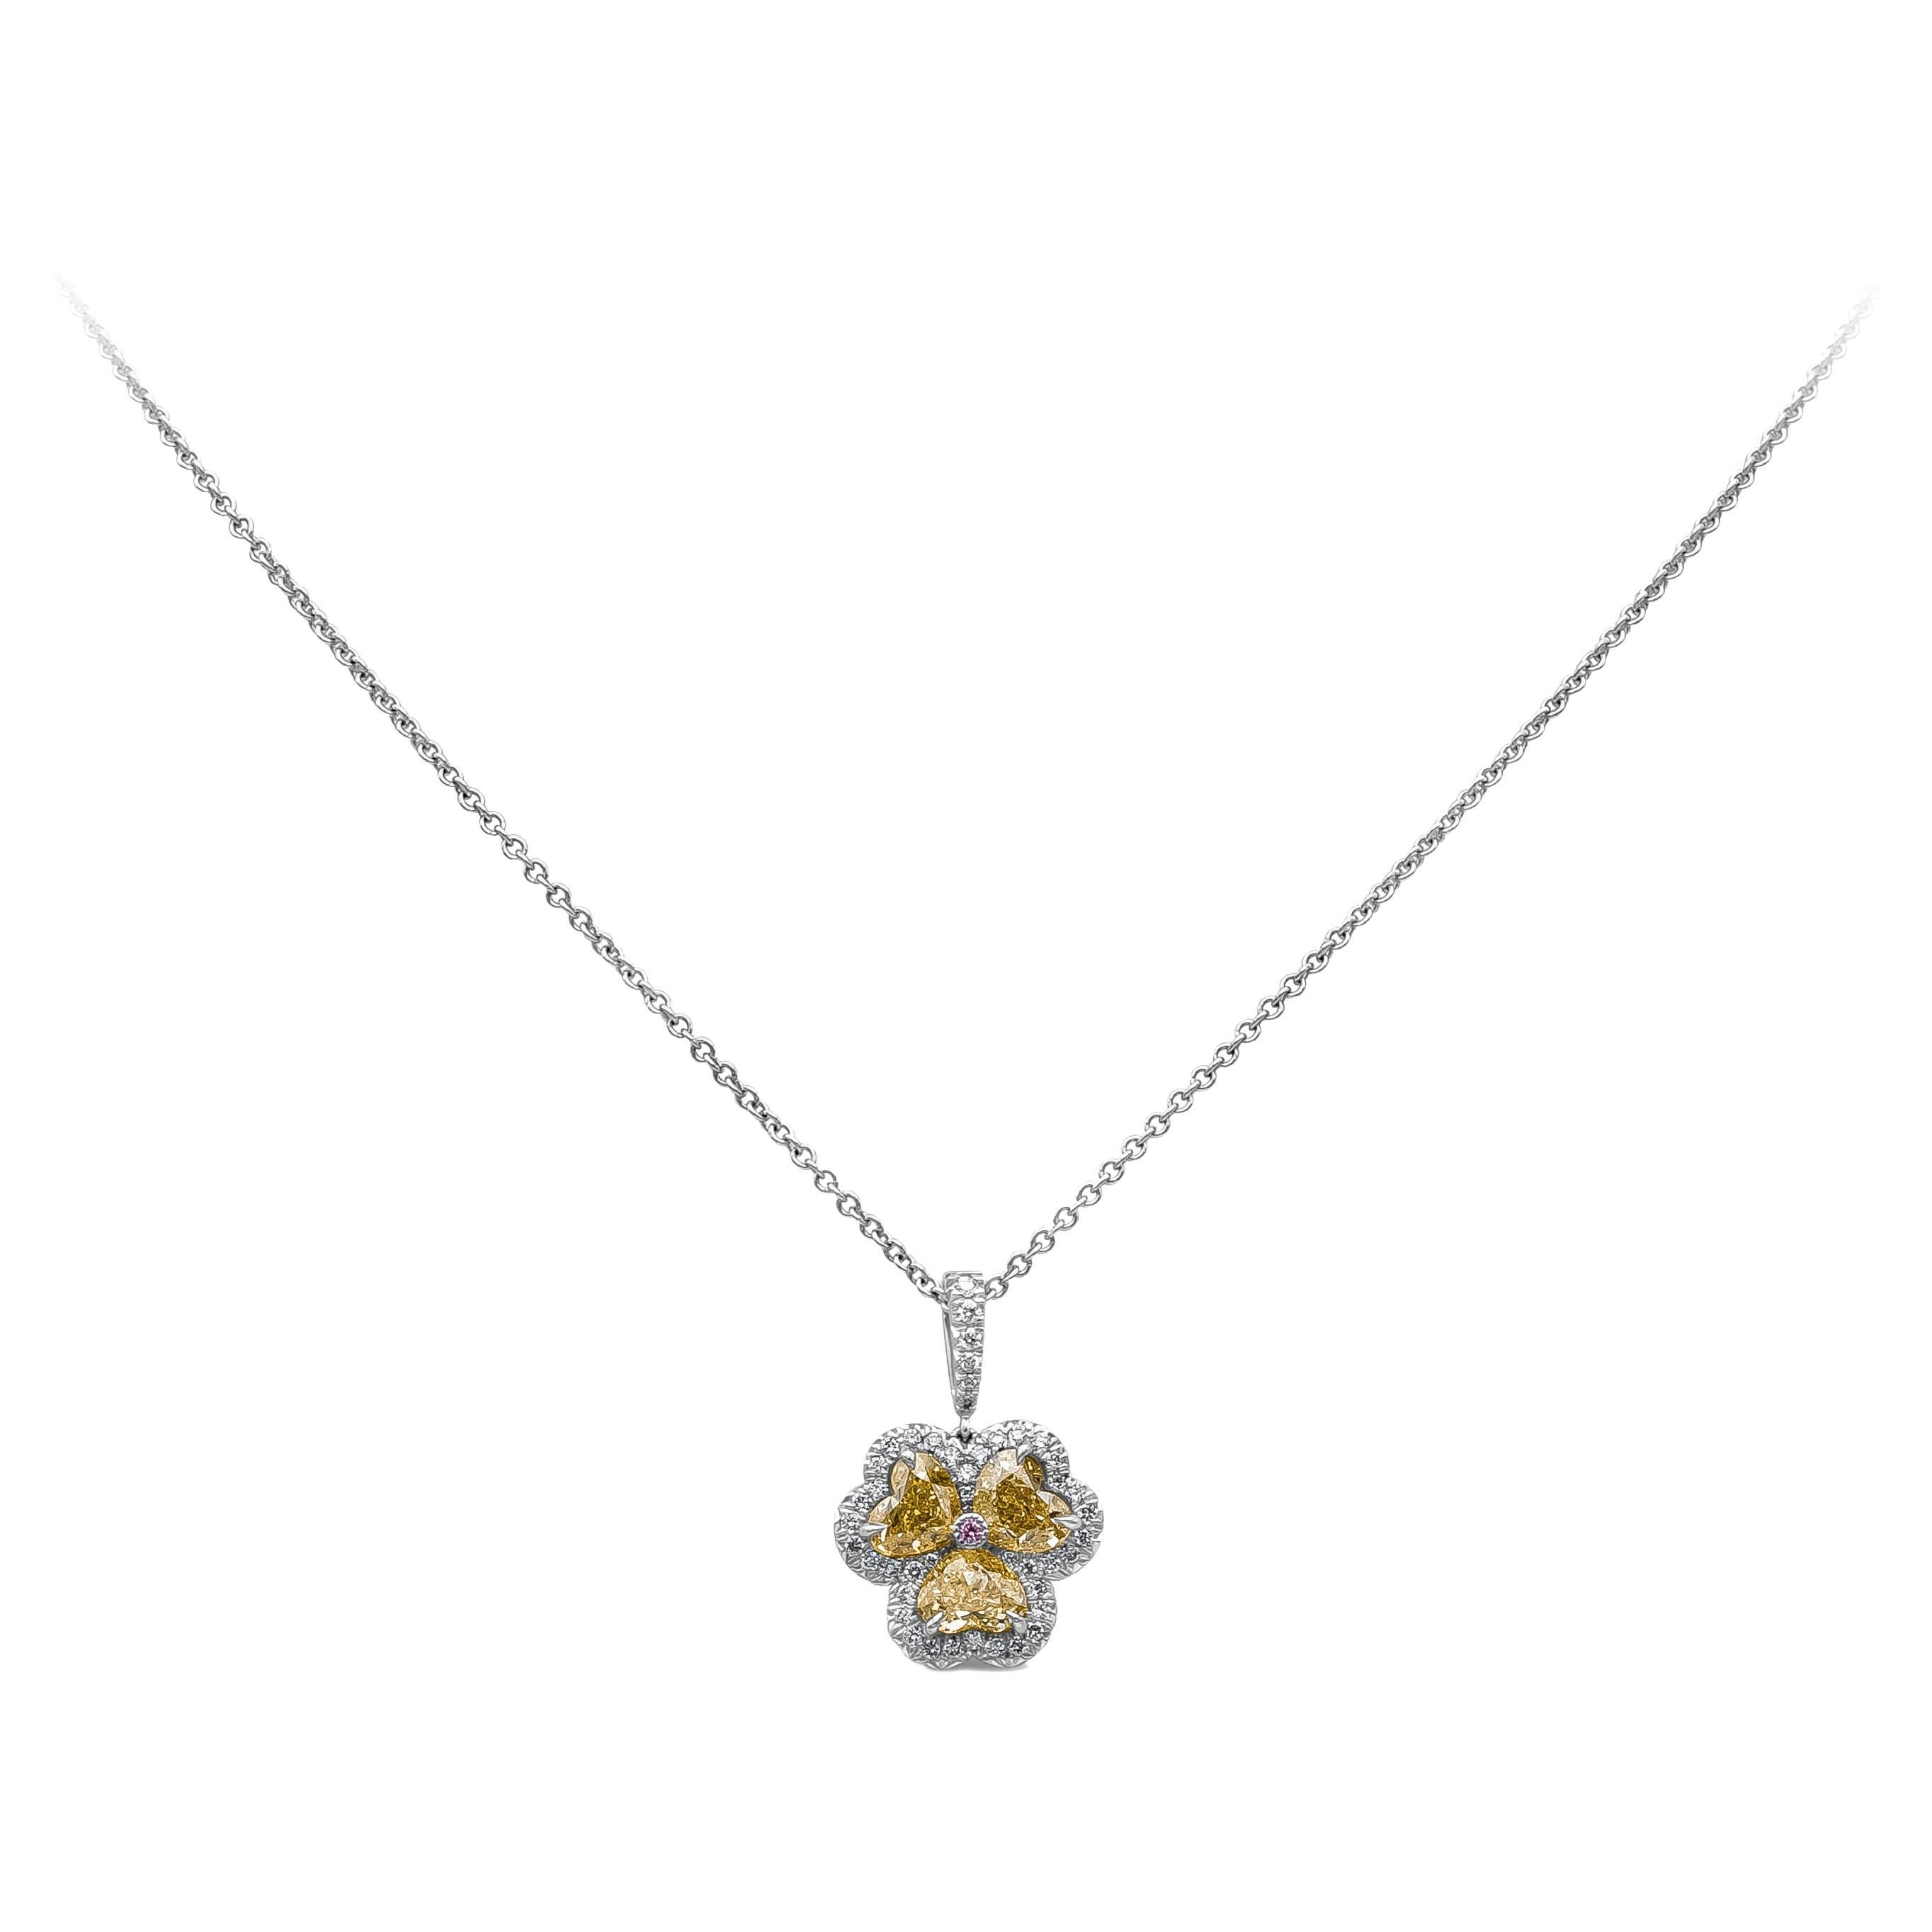 Roman Malakov, 1.66 Total Carat Fancy Yellow Color Diamond Pendant Necklace